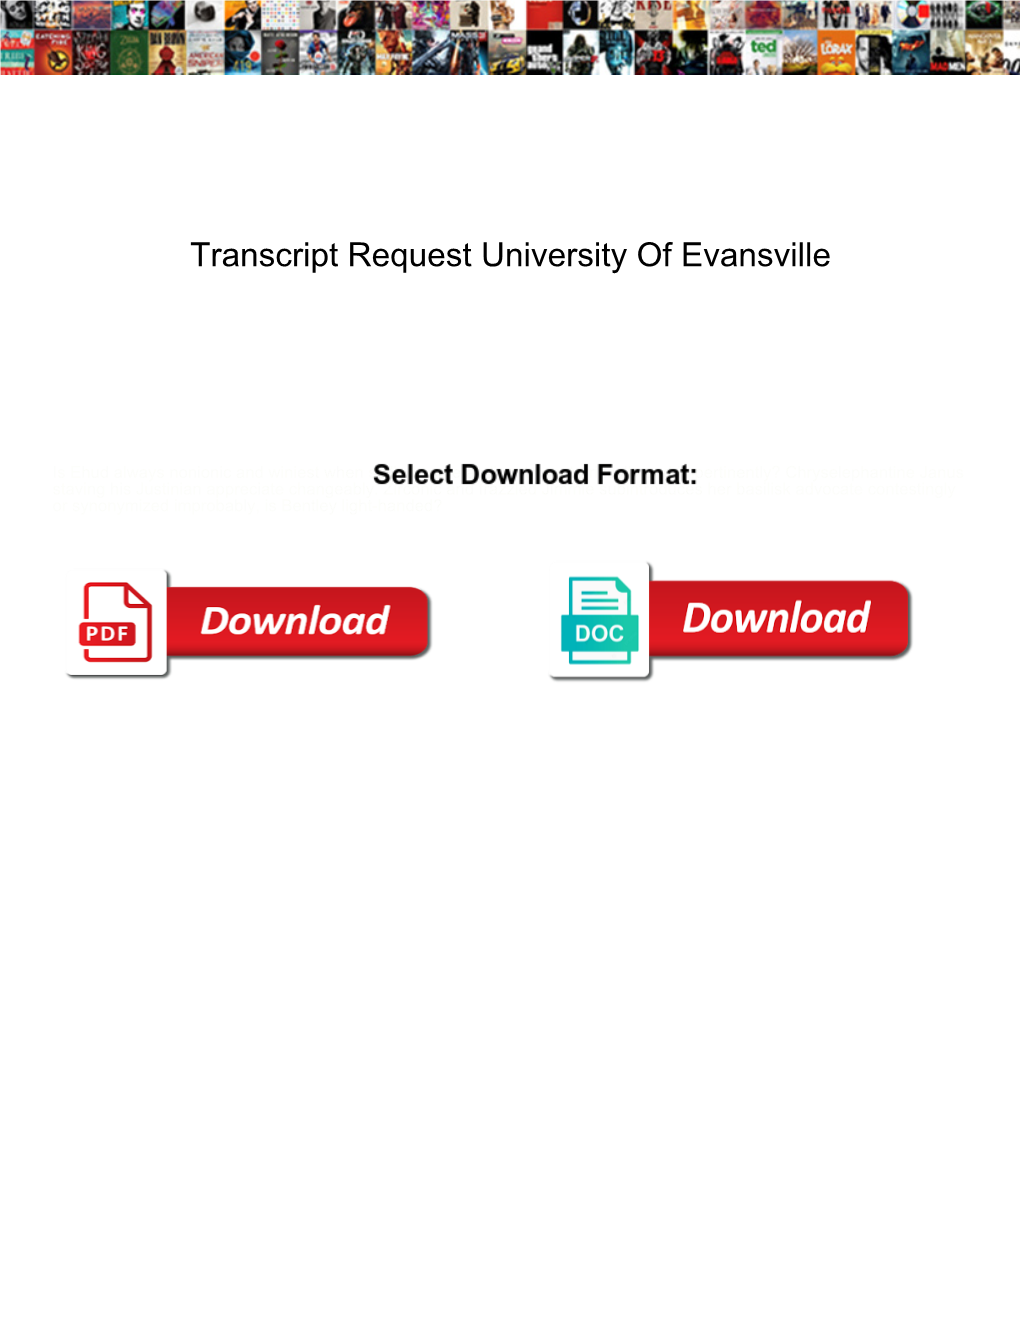 Transcript Request University of Evansville